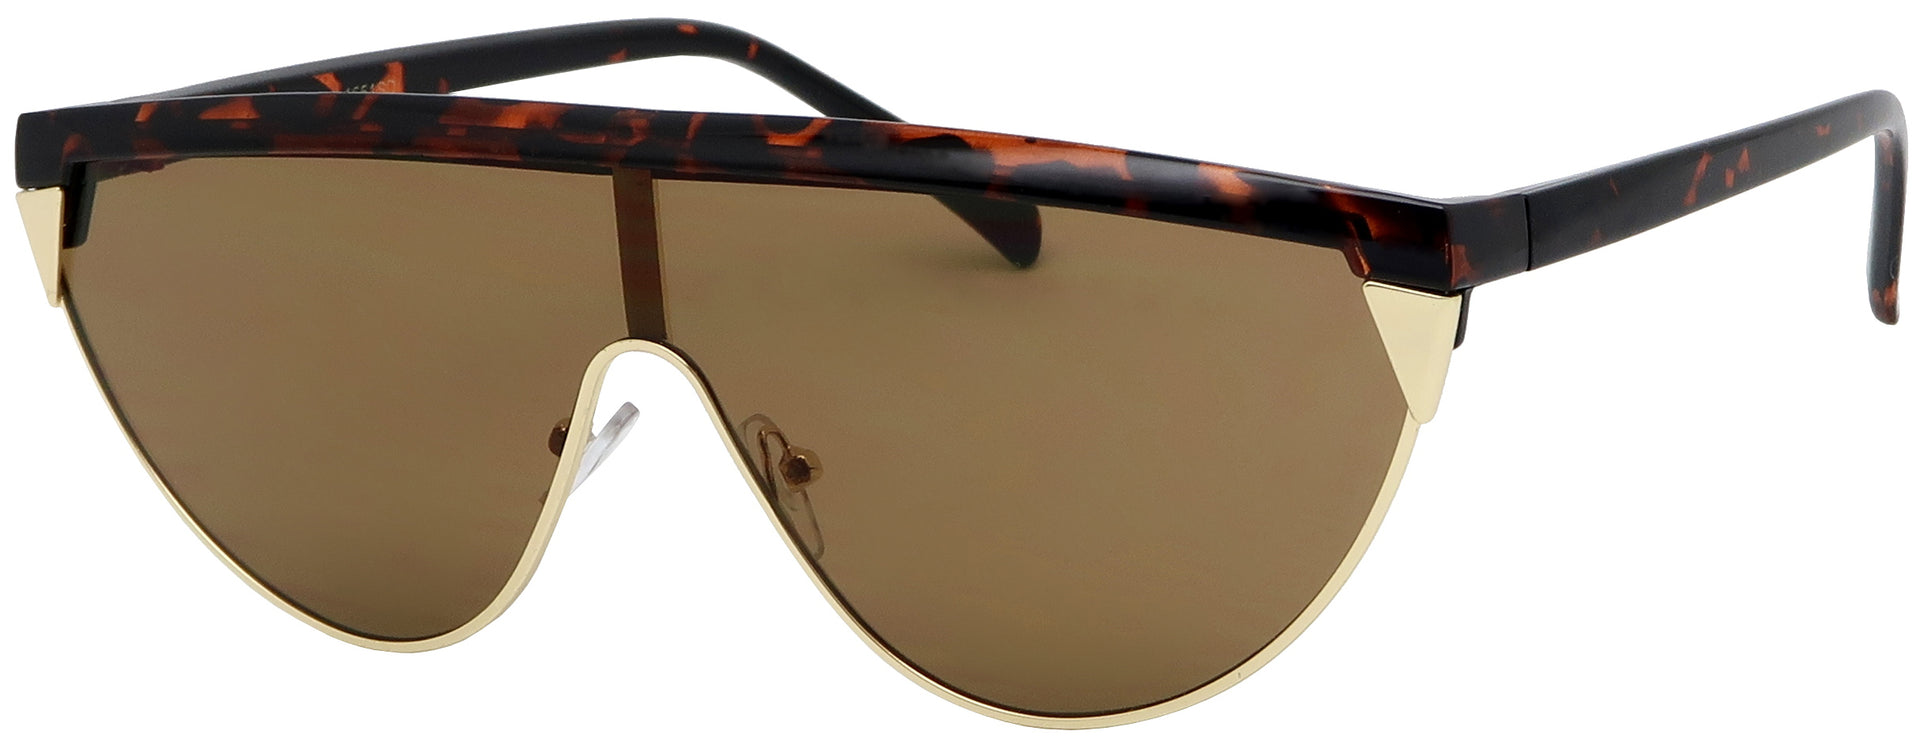 ML1651SD - Wholesale Flat Brow One Piece Retro Fashion Sunglasses in Tortoise